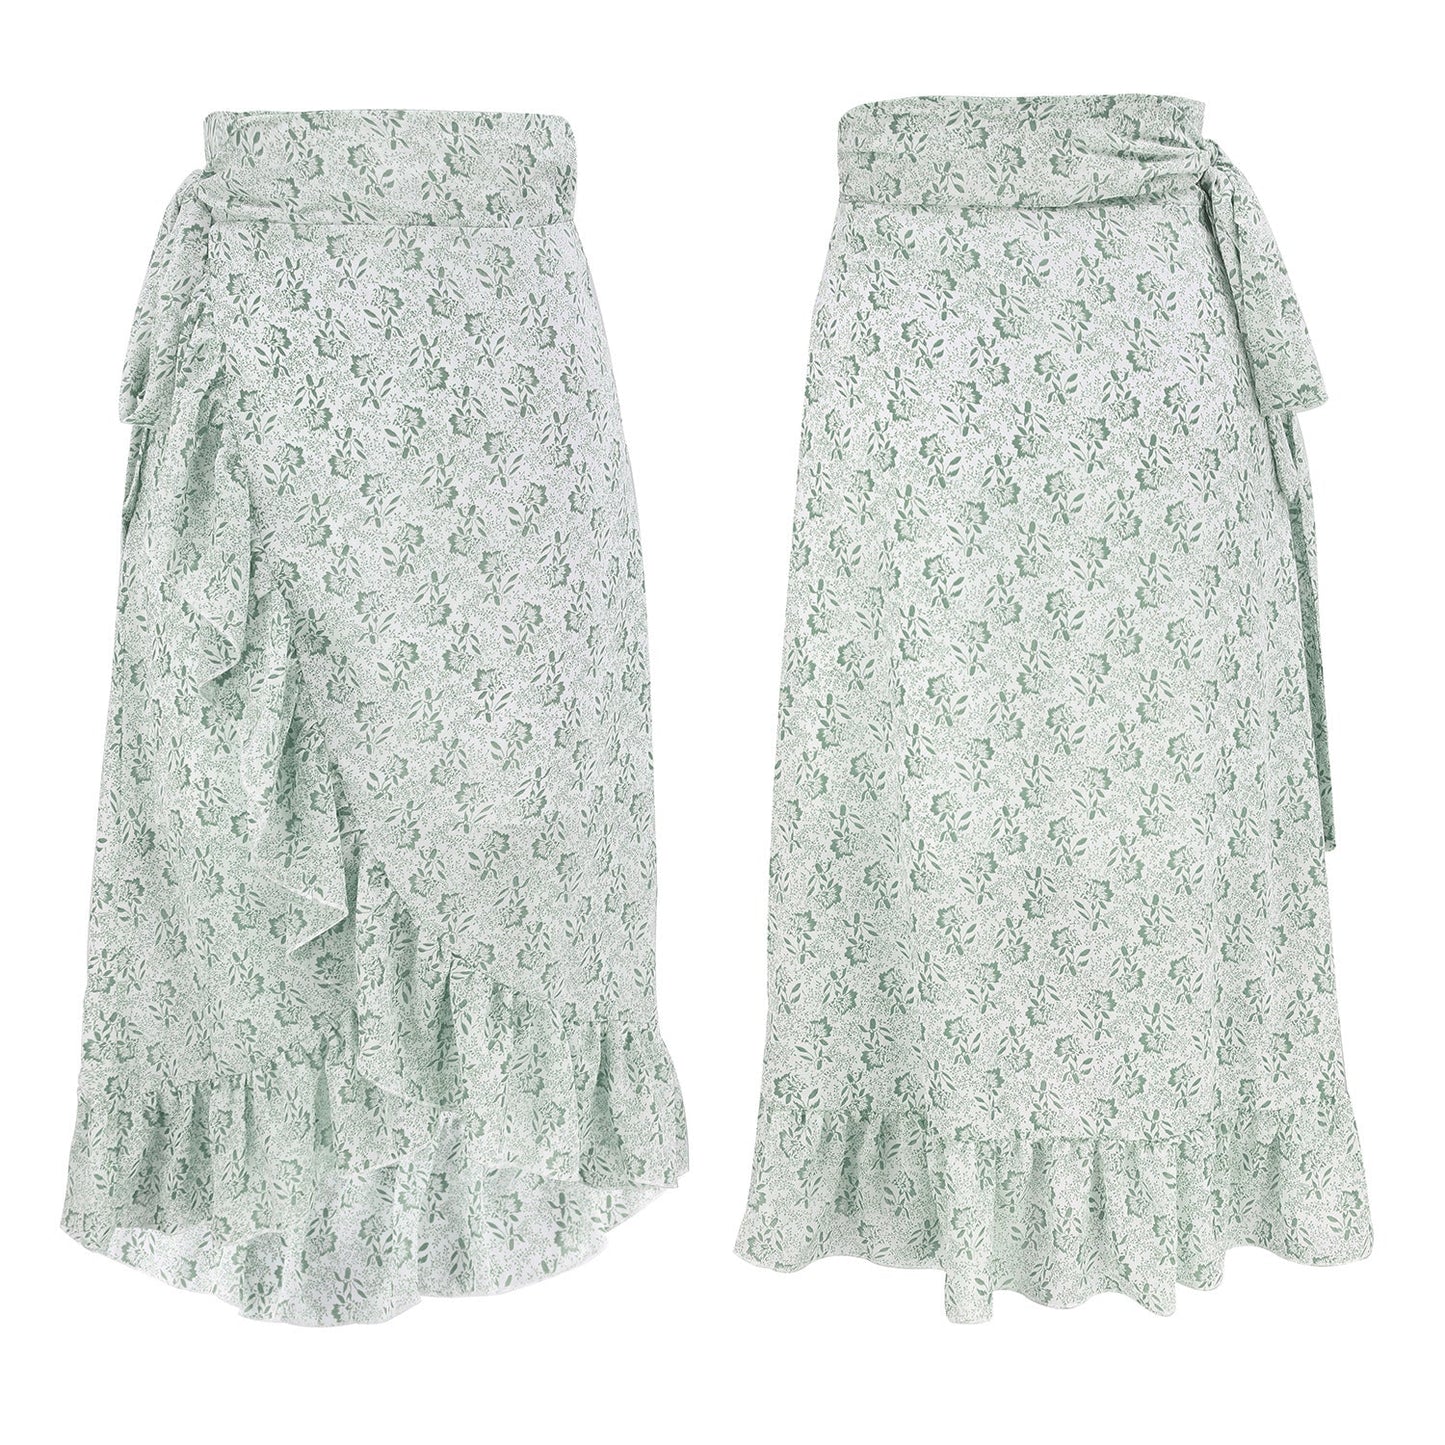 Sexy Summer Irregular Chiffon Skrts-Skirts-Green-S-Free Shipping Leatheretro